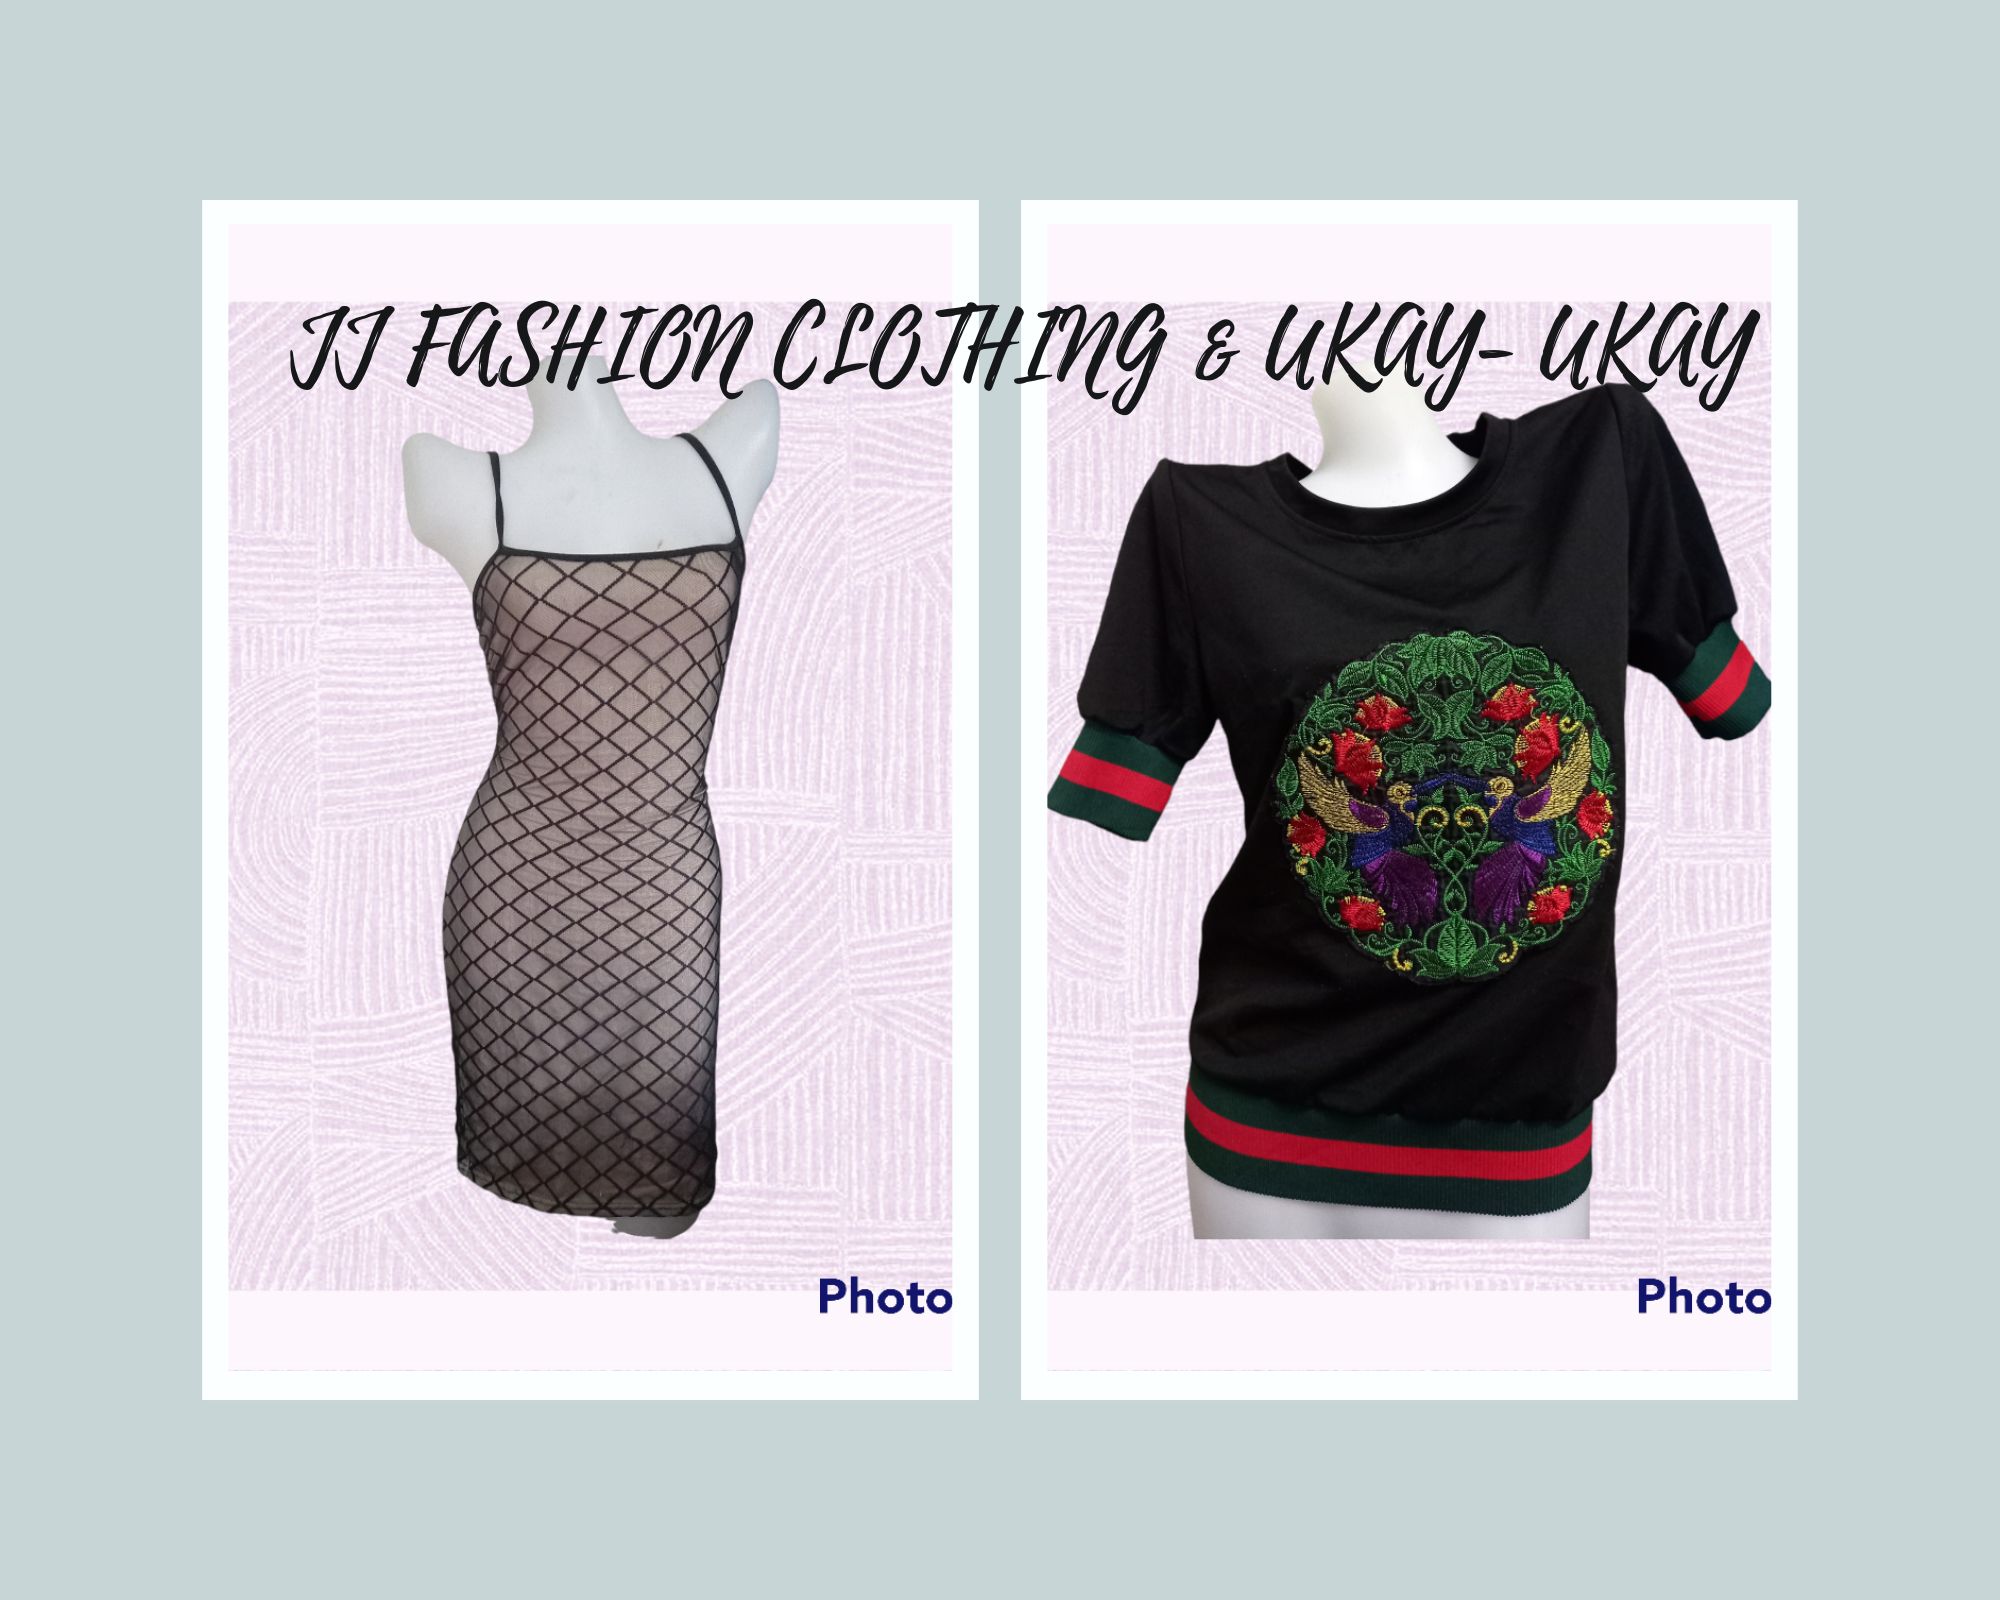 Shop online with JJ FASHION CLOTHING & UKAY-UKAY now! Visit JJ FASHION ...